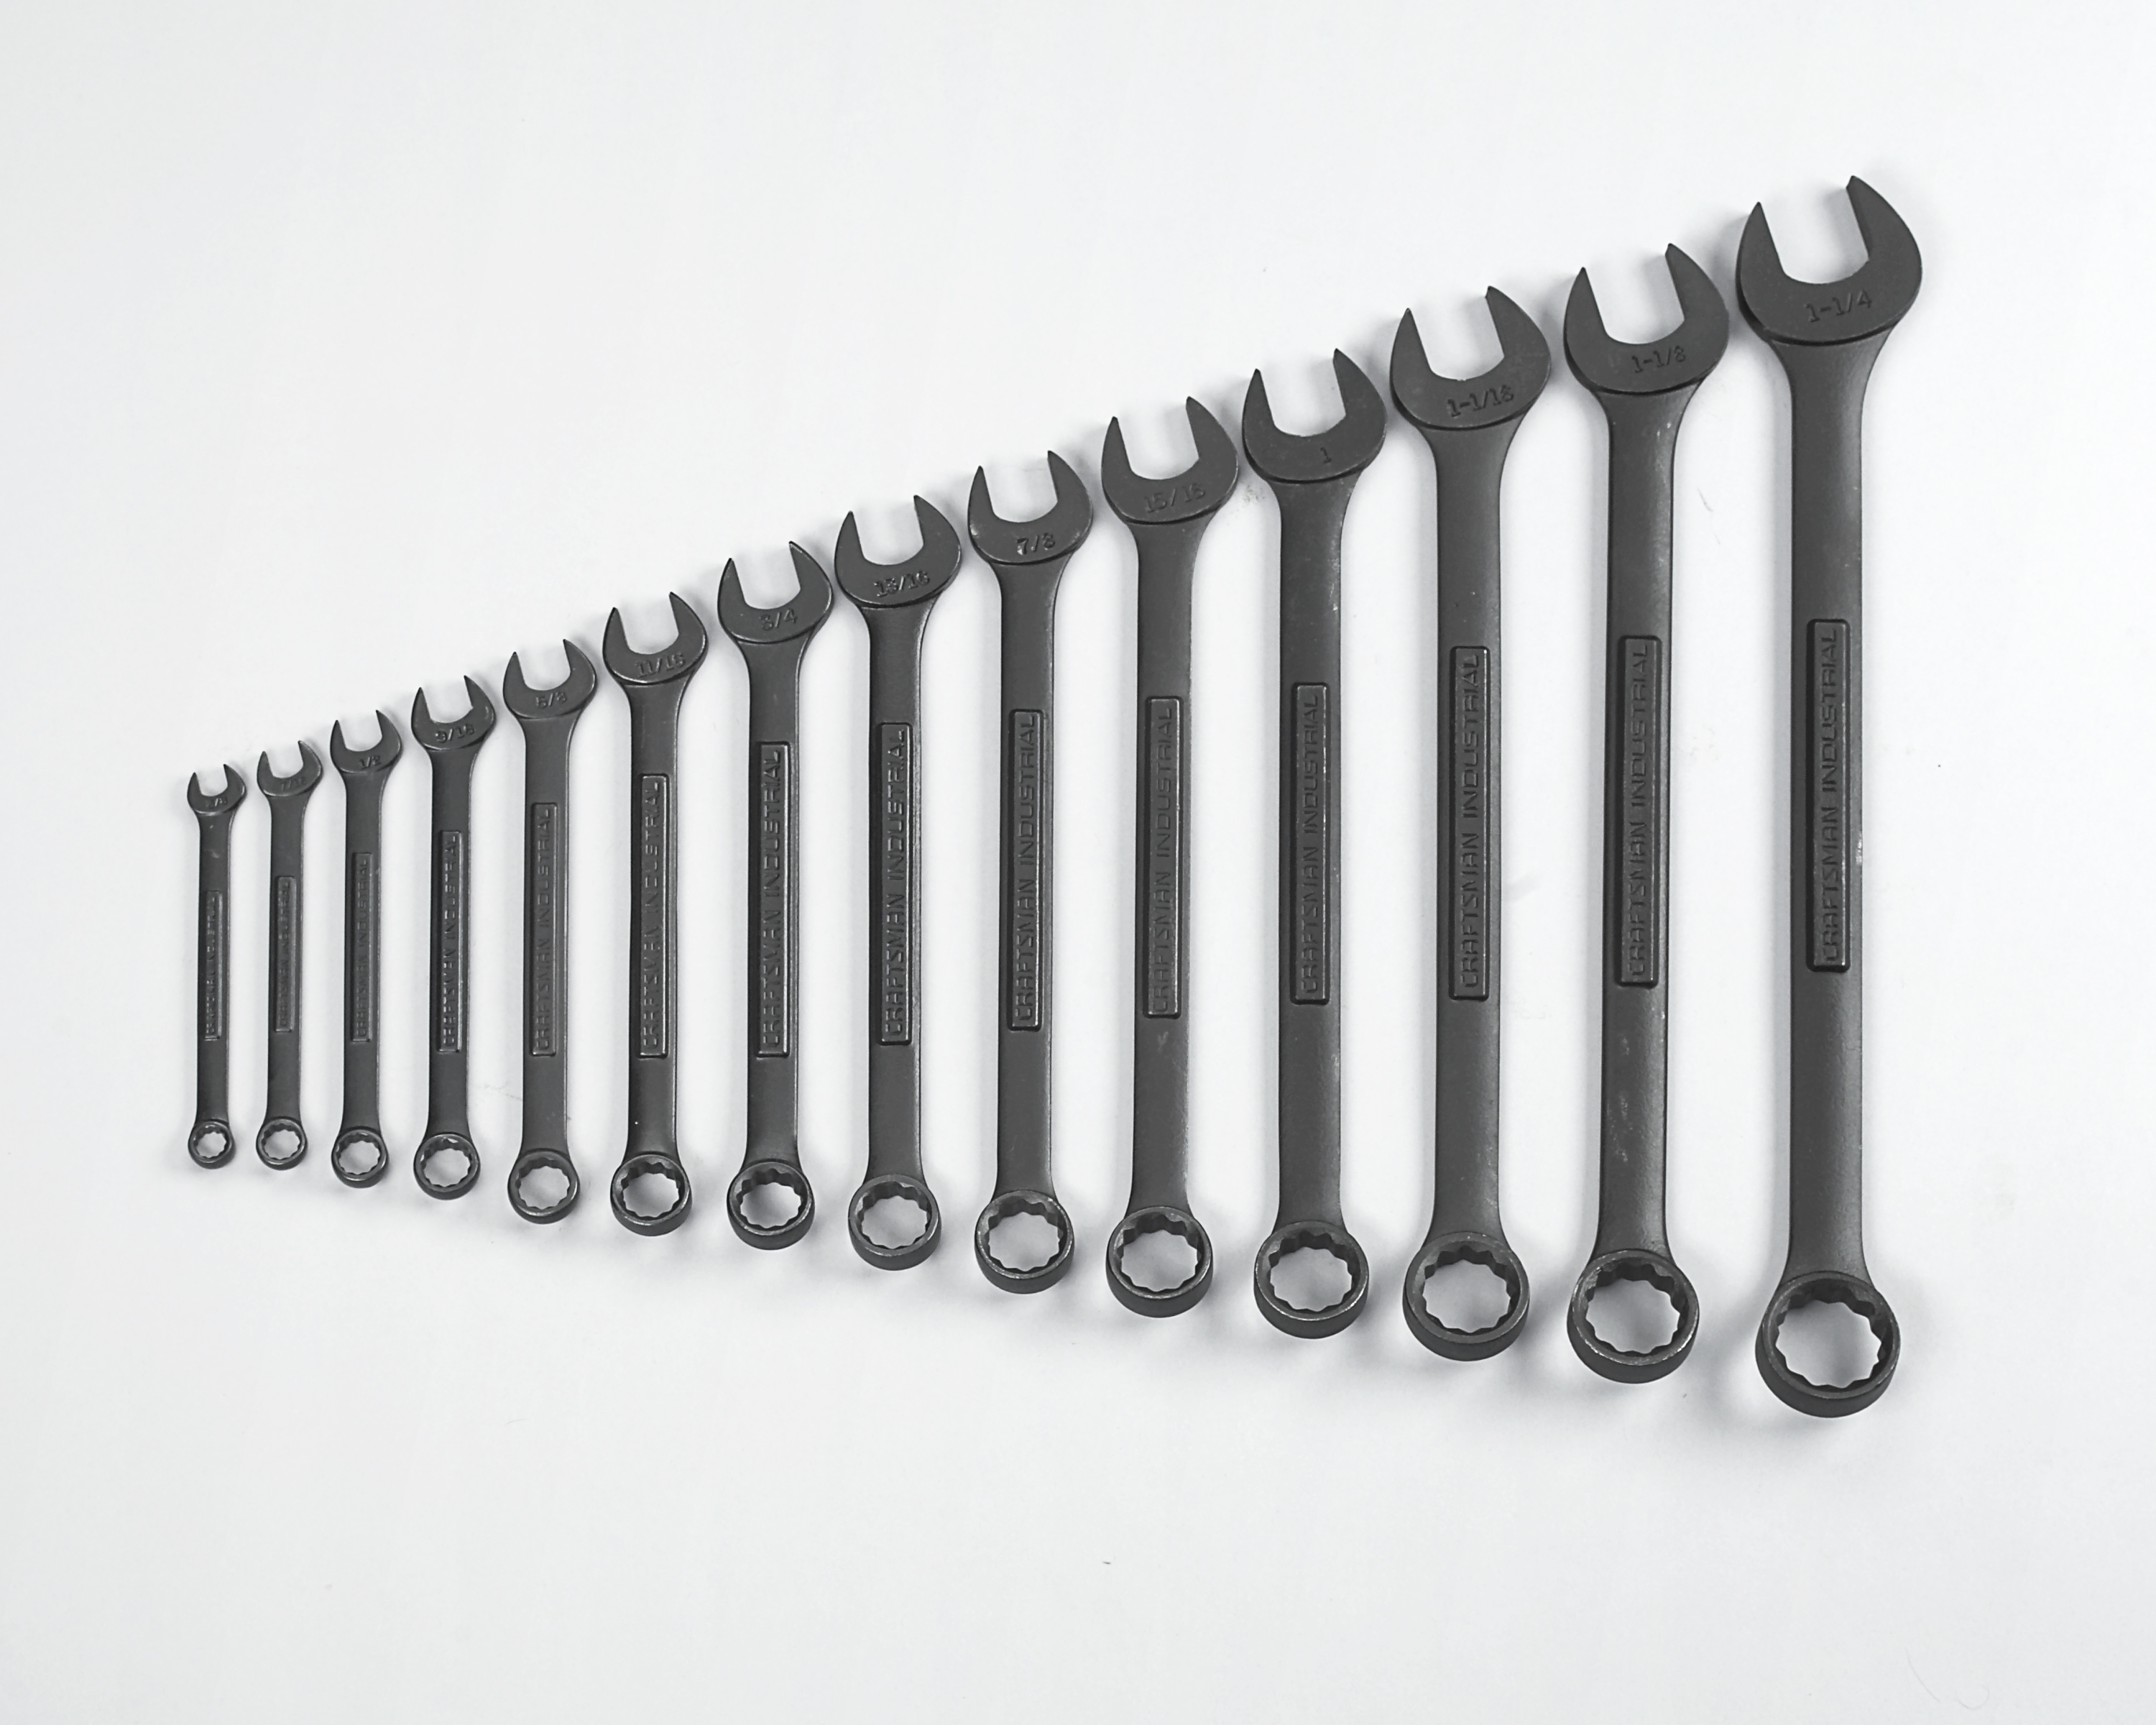 Craftsman Industrial Black Oxide Combination Wrench Set